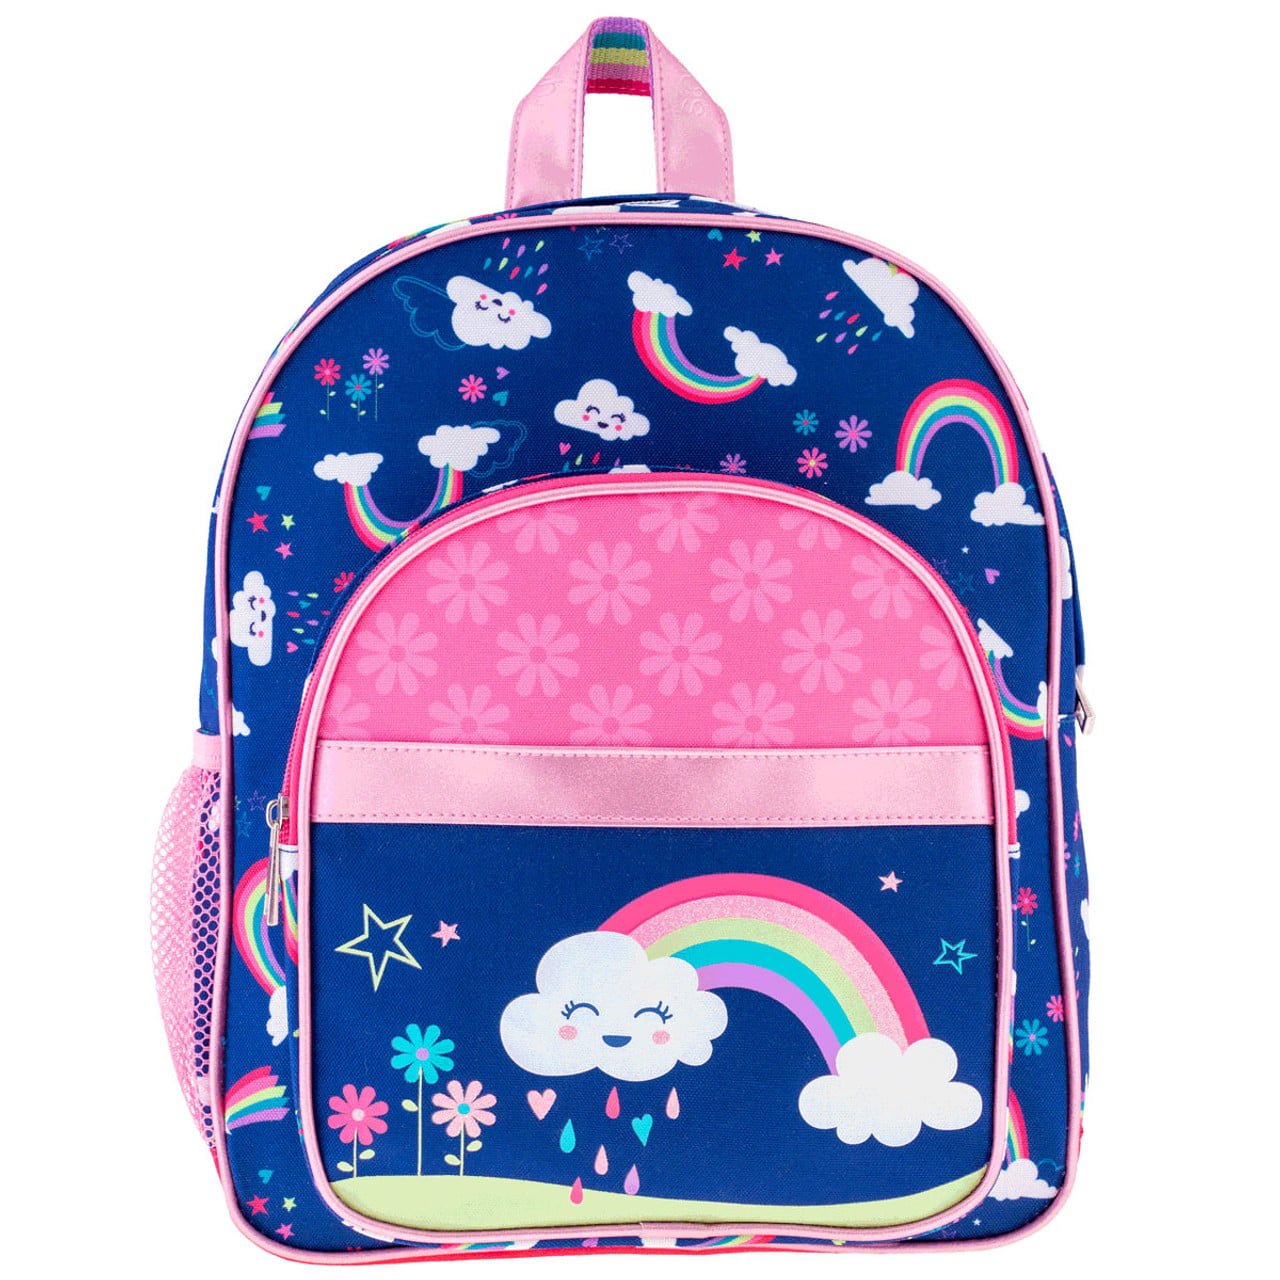 Stephen Joseph Classic Backpack for Kids - Rainbow